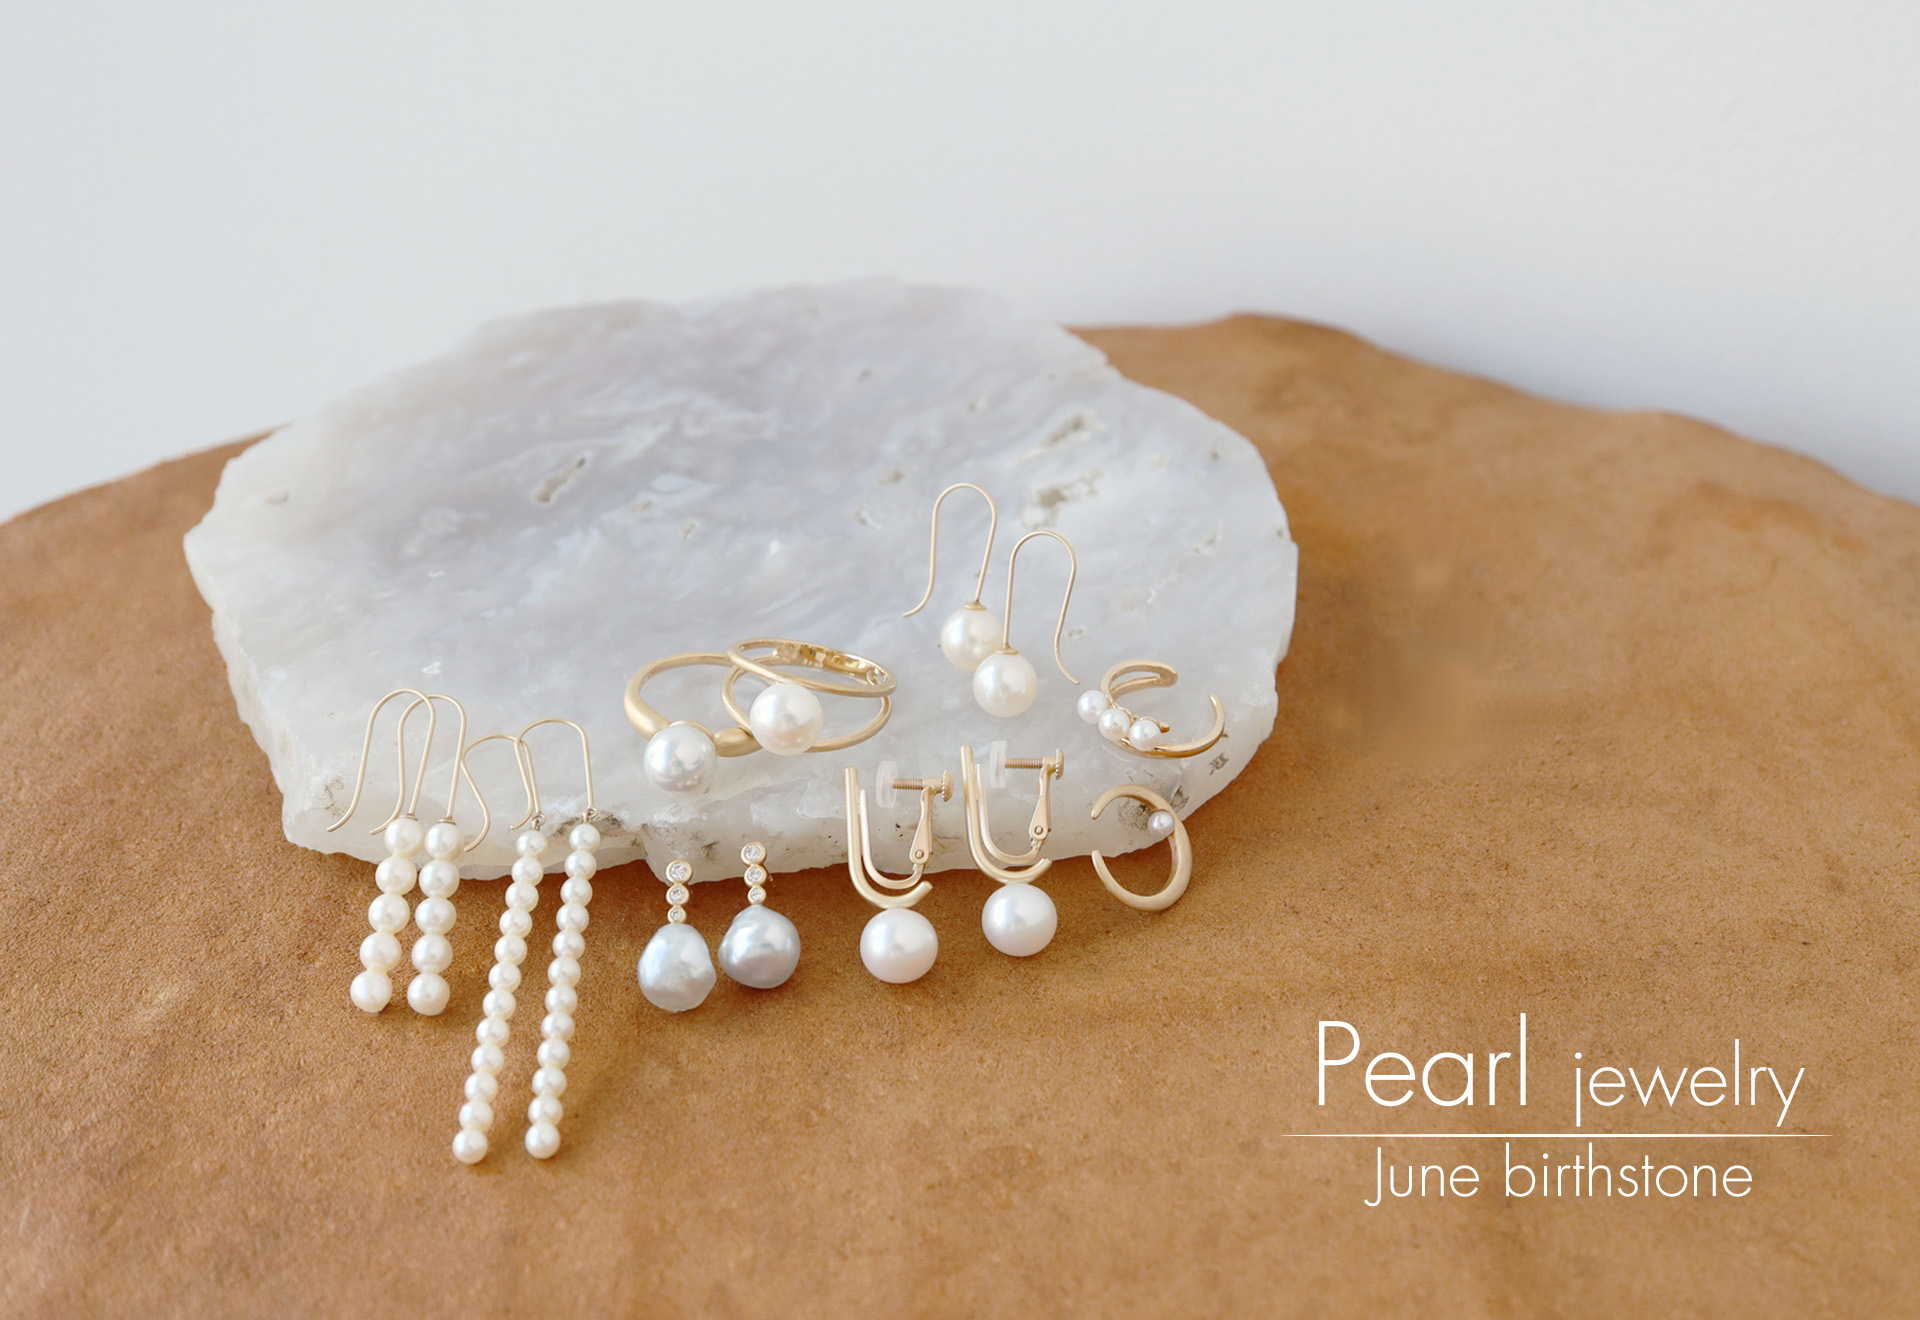 Pearl jewelry ~June birthstone ~